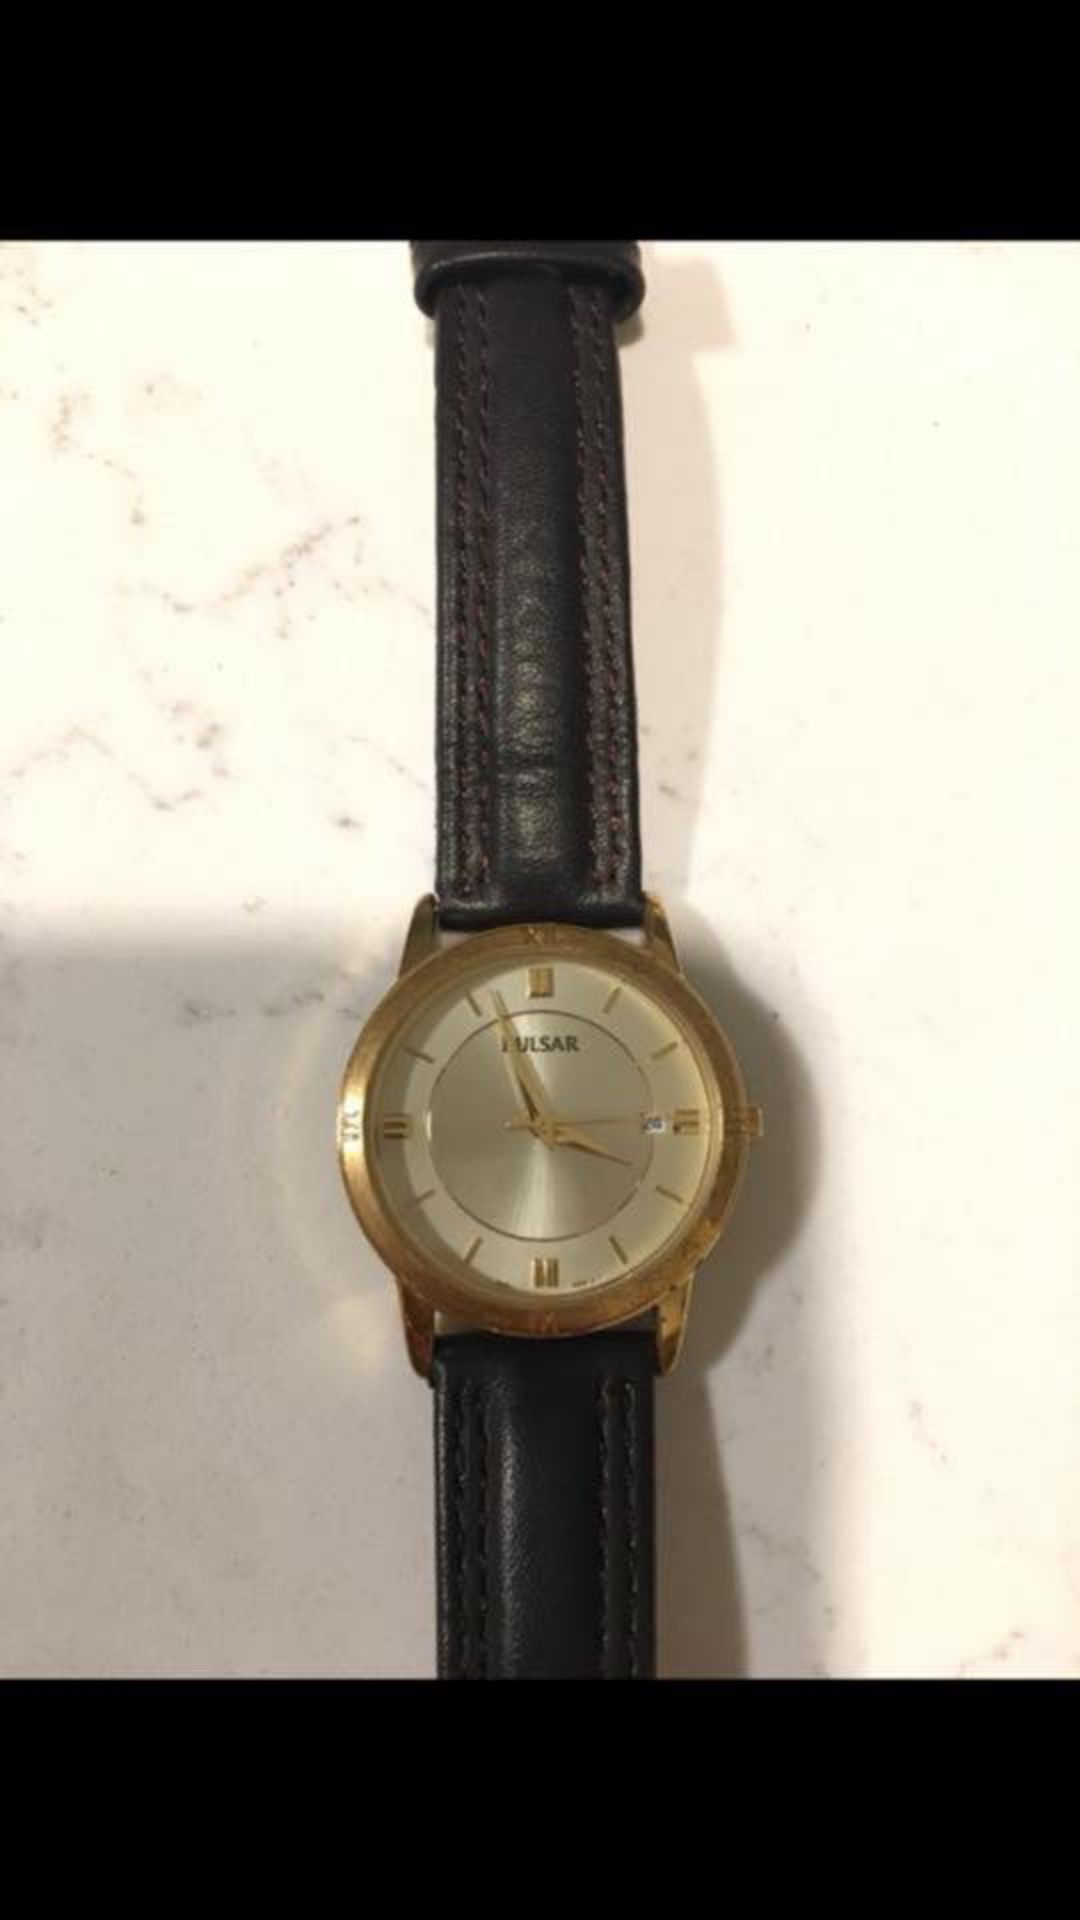 Pulsar vintage watch. Japan movement. New battery